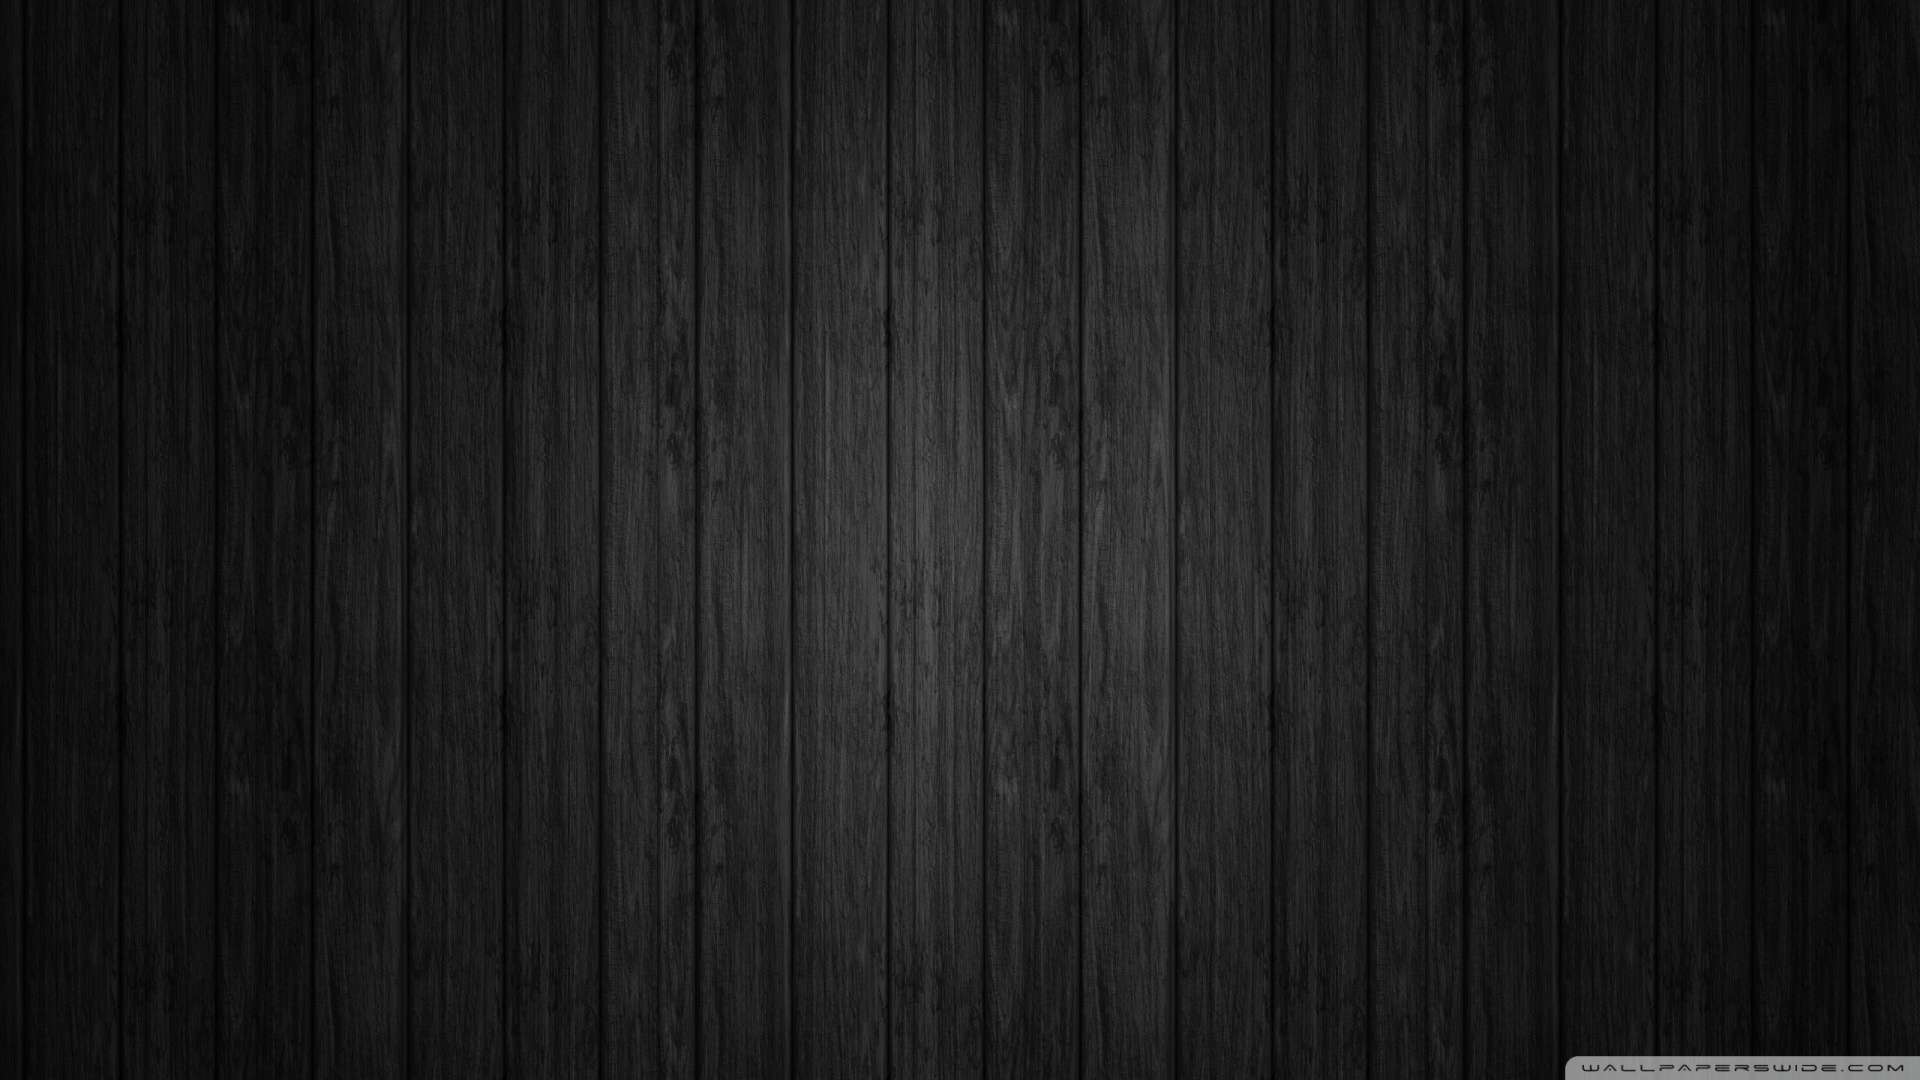 Wallpaper Black Background Wood Wallpaper 1080p HD Upload at 1920x1080